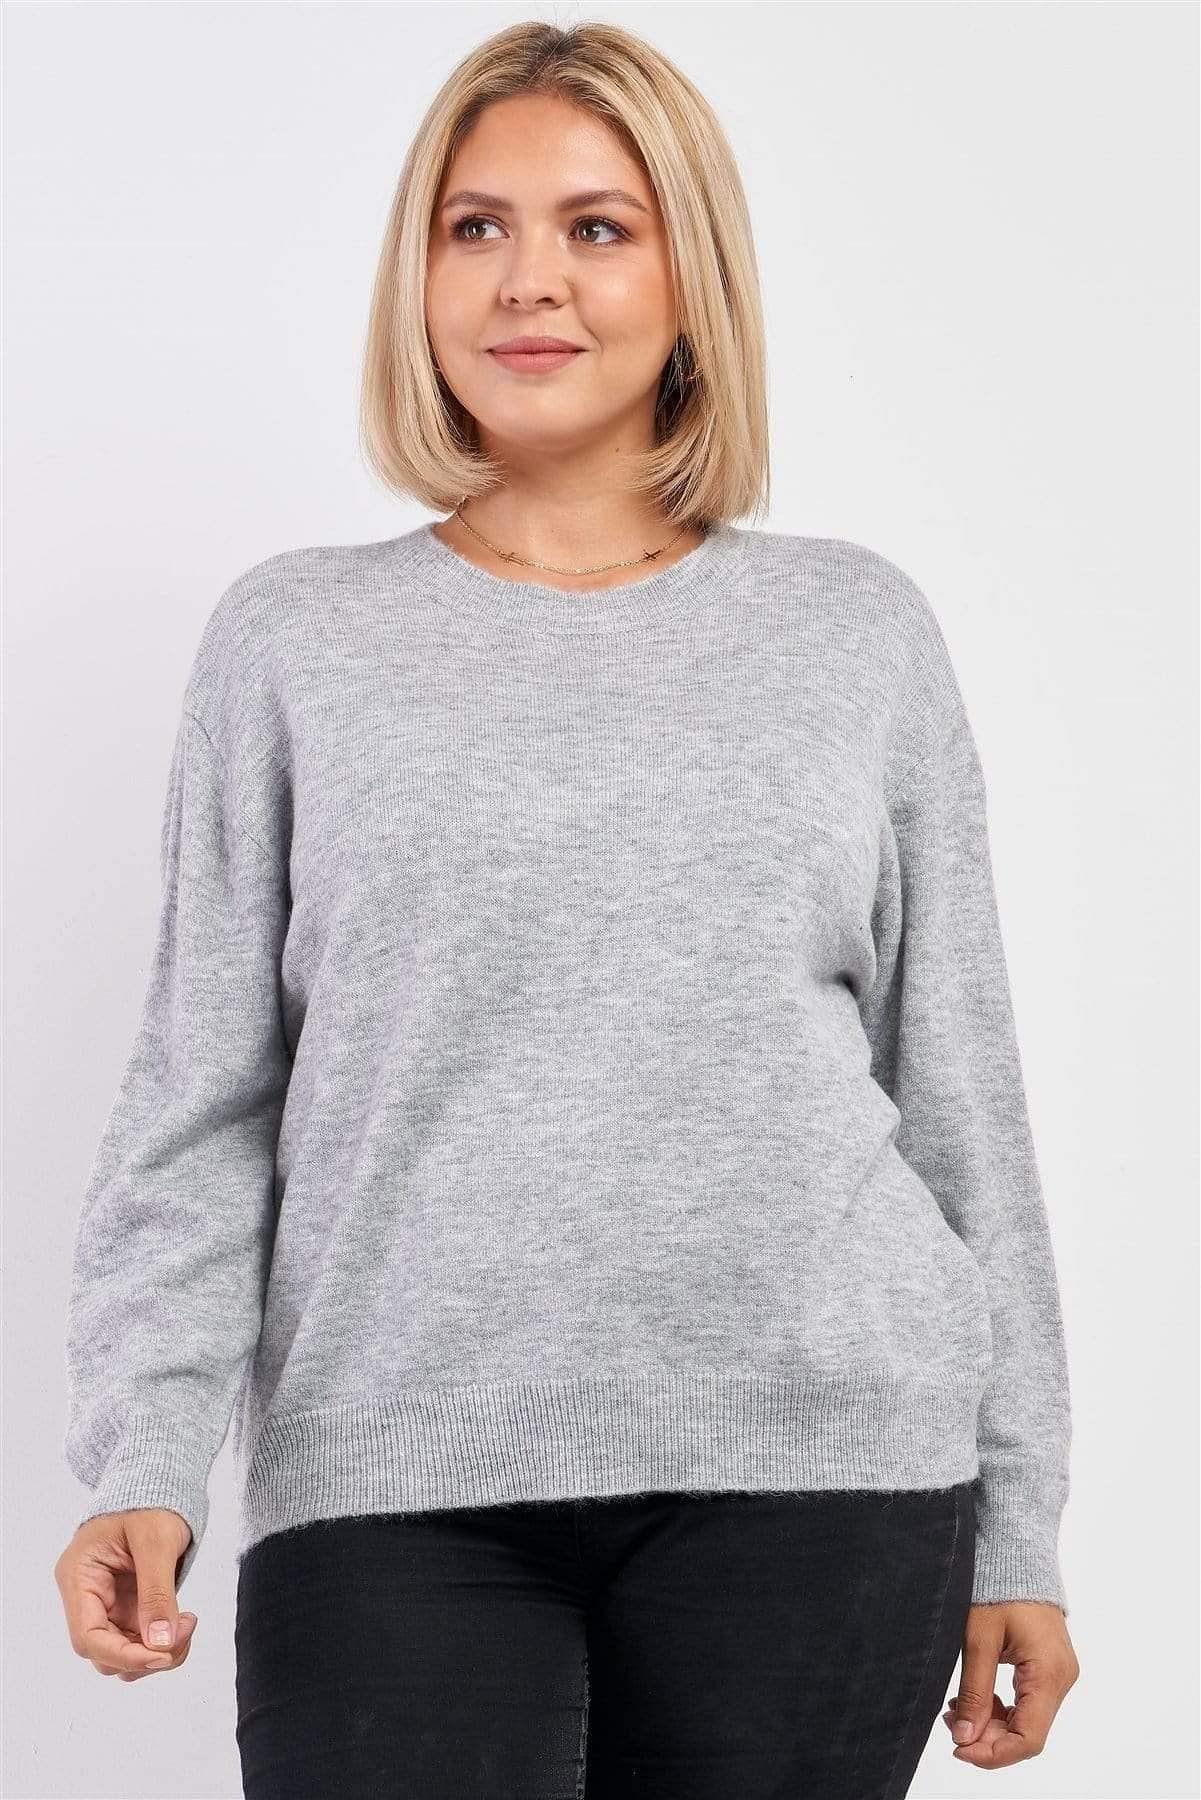 Heather Gray Plus Size Long Sleeve Sweatshirt - Shopping Therapy 1XL Shirts & Tops